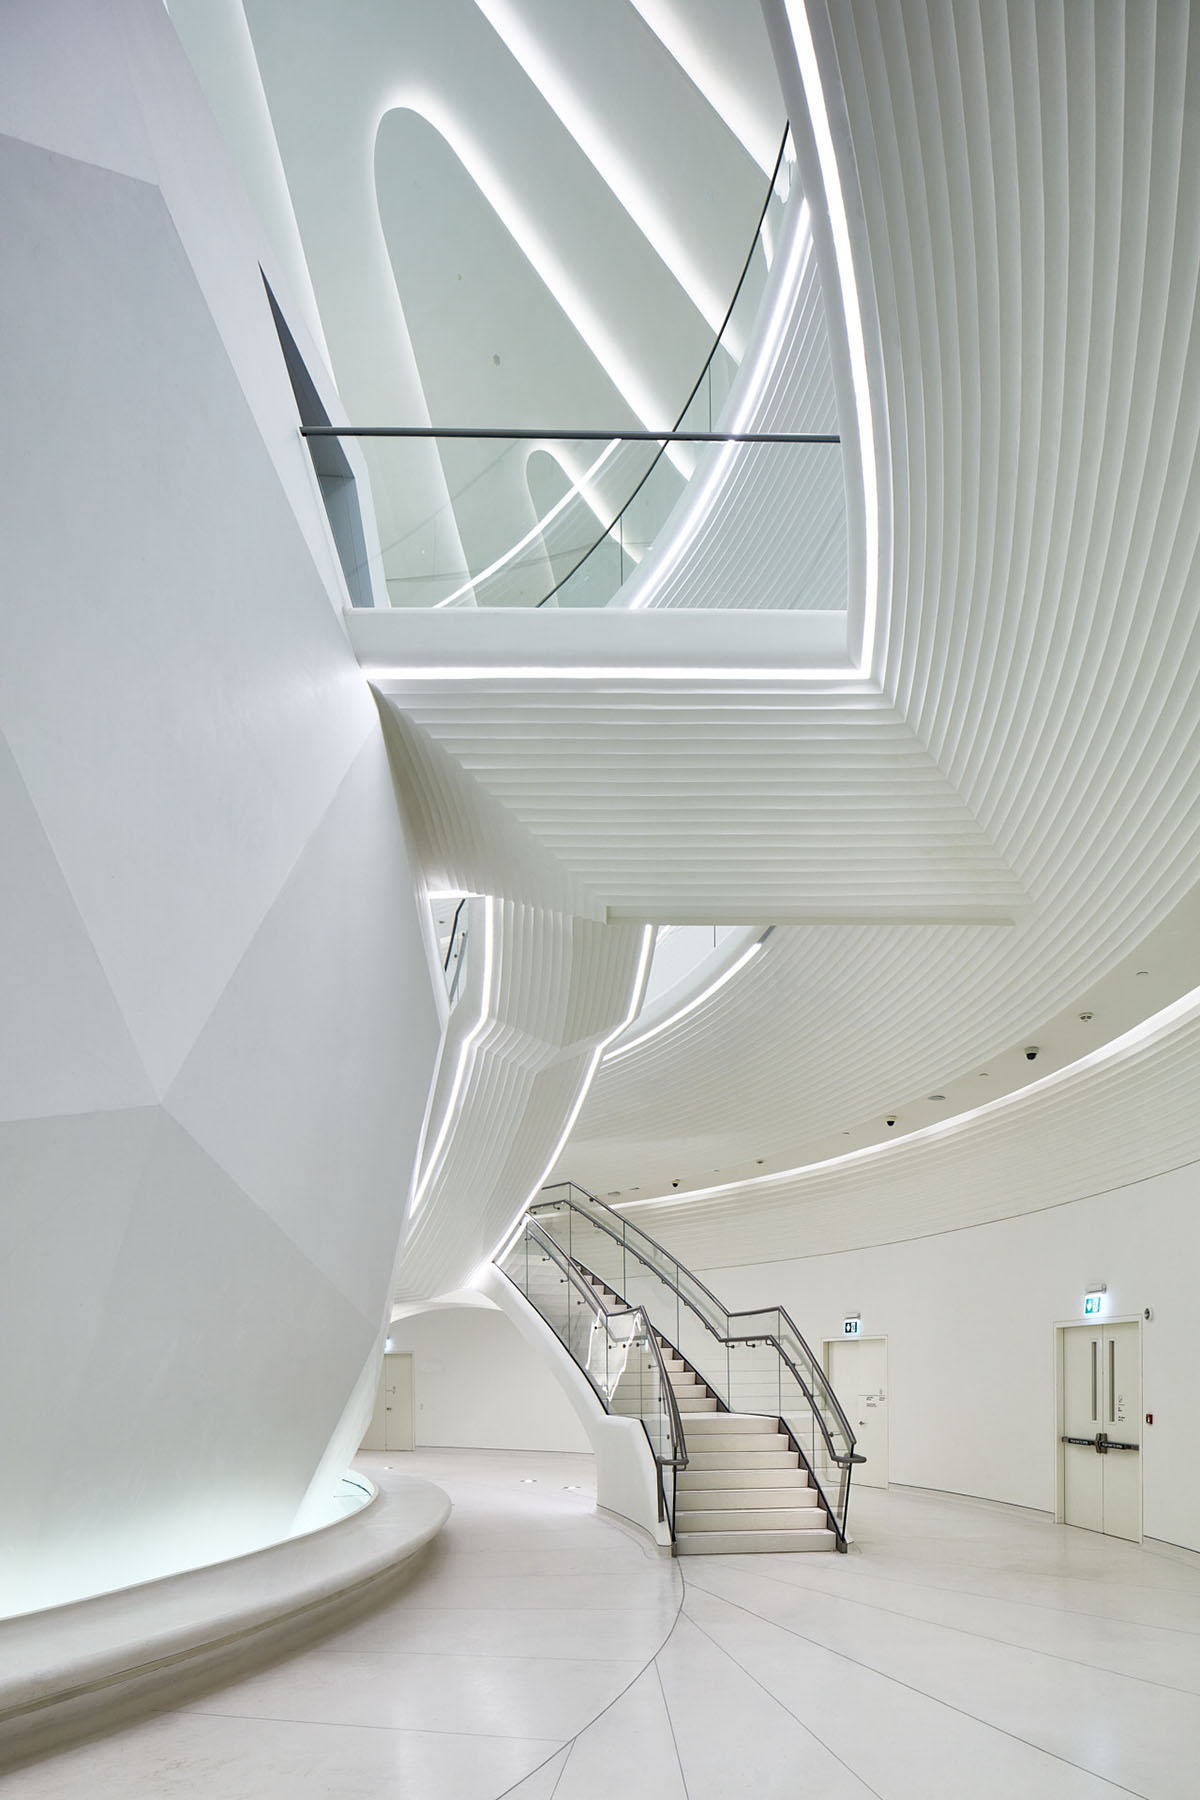 Santiago Calatrava reveals UAE Pavilion at Dubai Expo